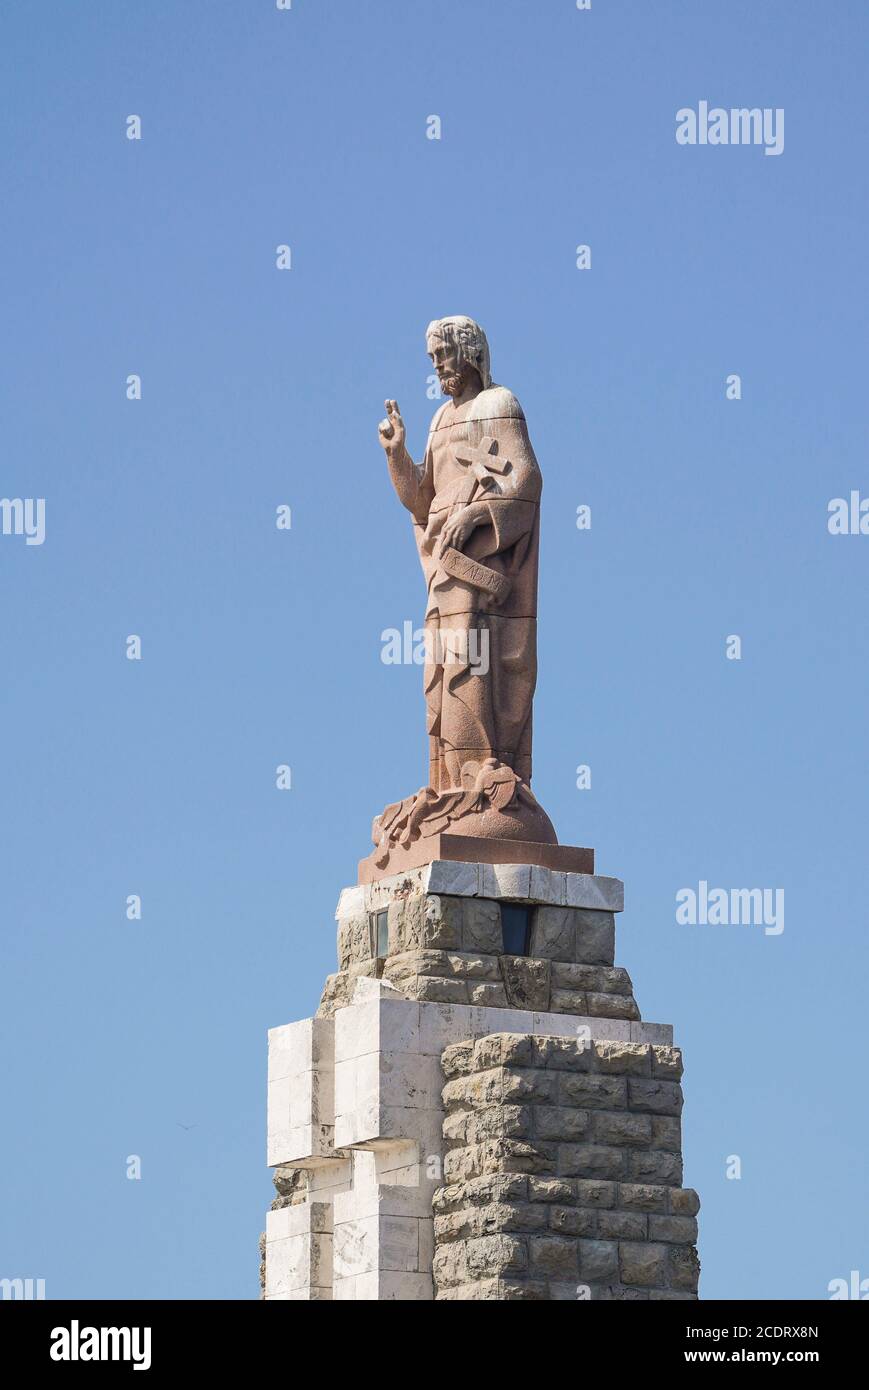 Jesus Christus statue at the port entrance in Tarifa, Sagrado Corazon de Jesus, jesus christ statue, Costa de la Luz, Andalucia, Spain. Stock Photo